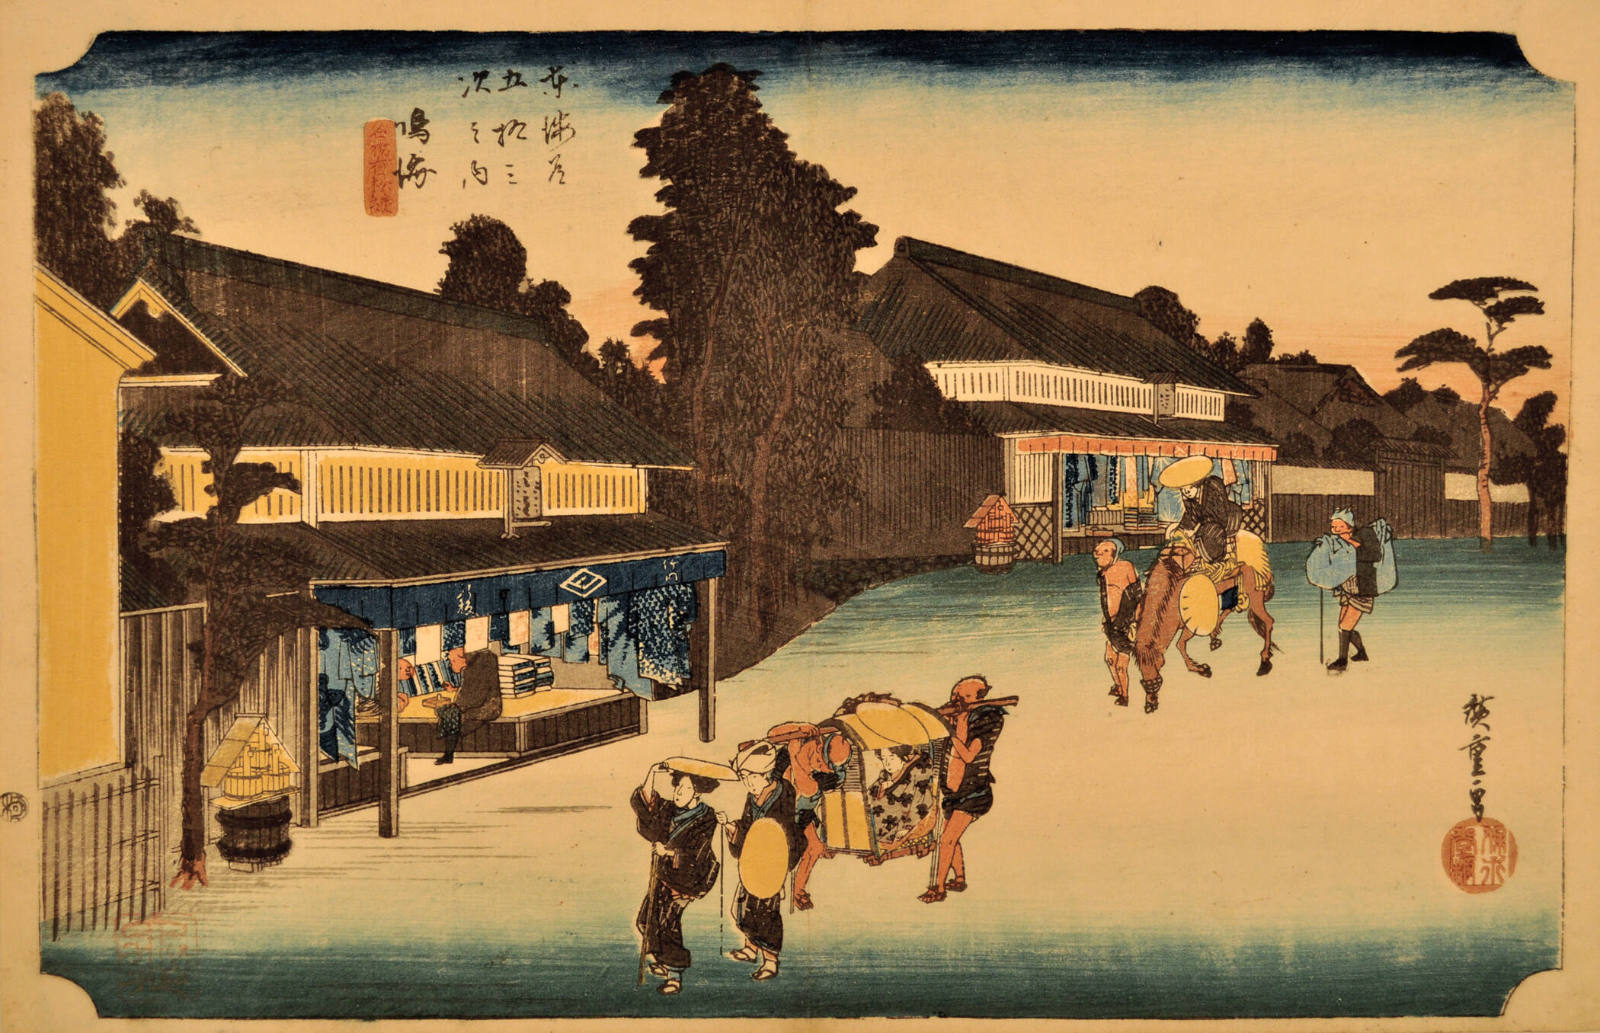 Arimatsu Tie-dyed Fabrics, a Famous Product of Narumi (鳴海 名物有松絞, Narumi, meibutsu Arimatsu-shibori), no. 41 from the series Fifty-Three Stations of the Tokkaido Road (東海道五十三次之内)